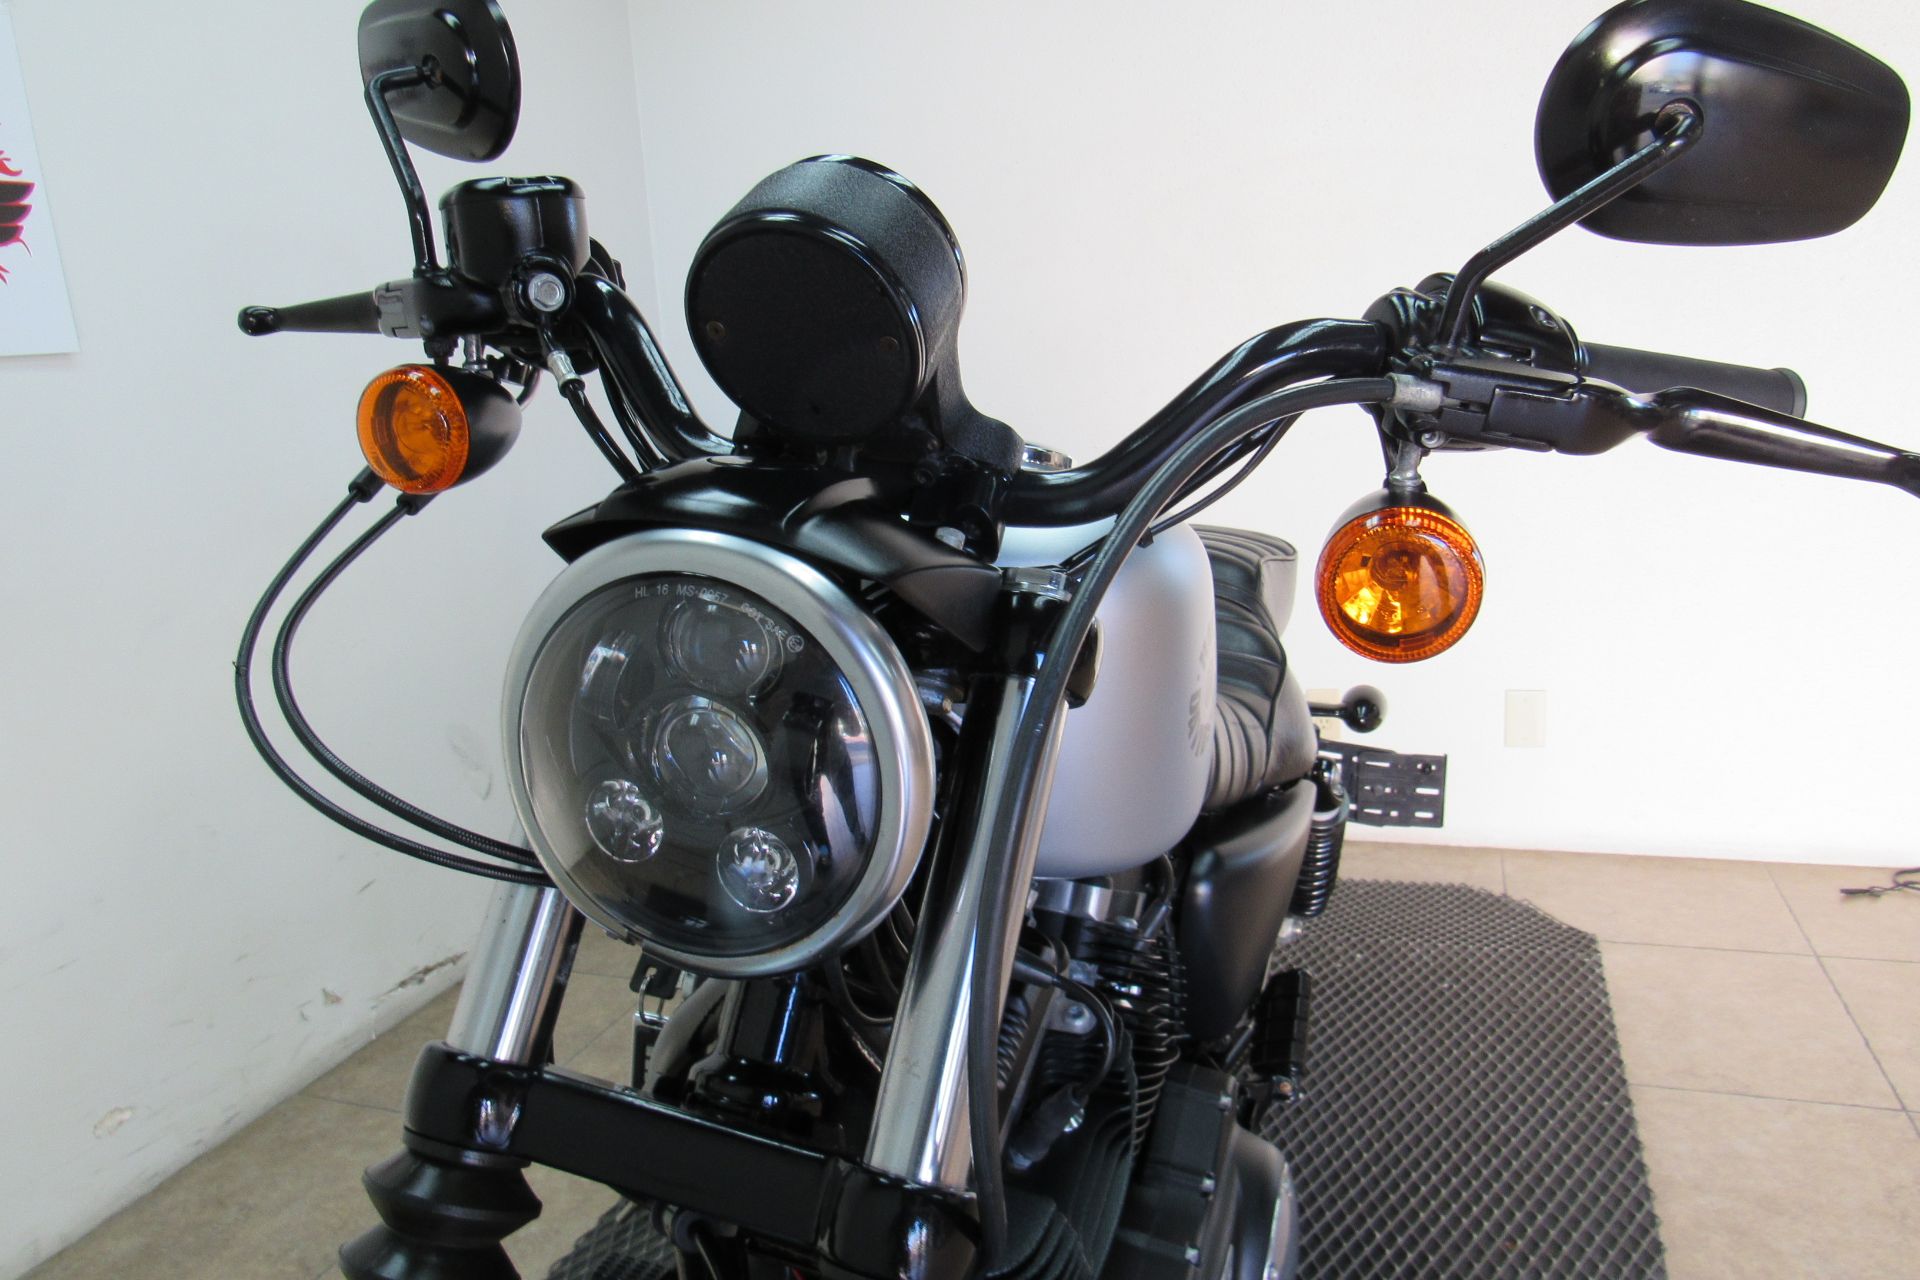 2020 Harley-Davidson Iron 883™ in Temecula, California - Photo 30